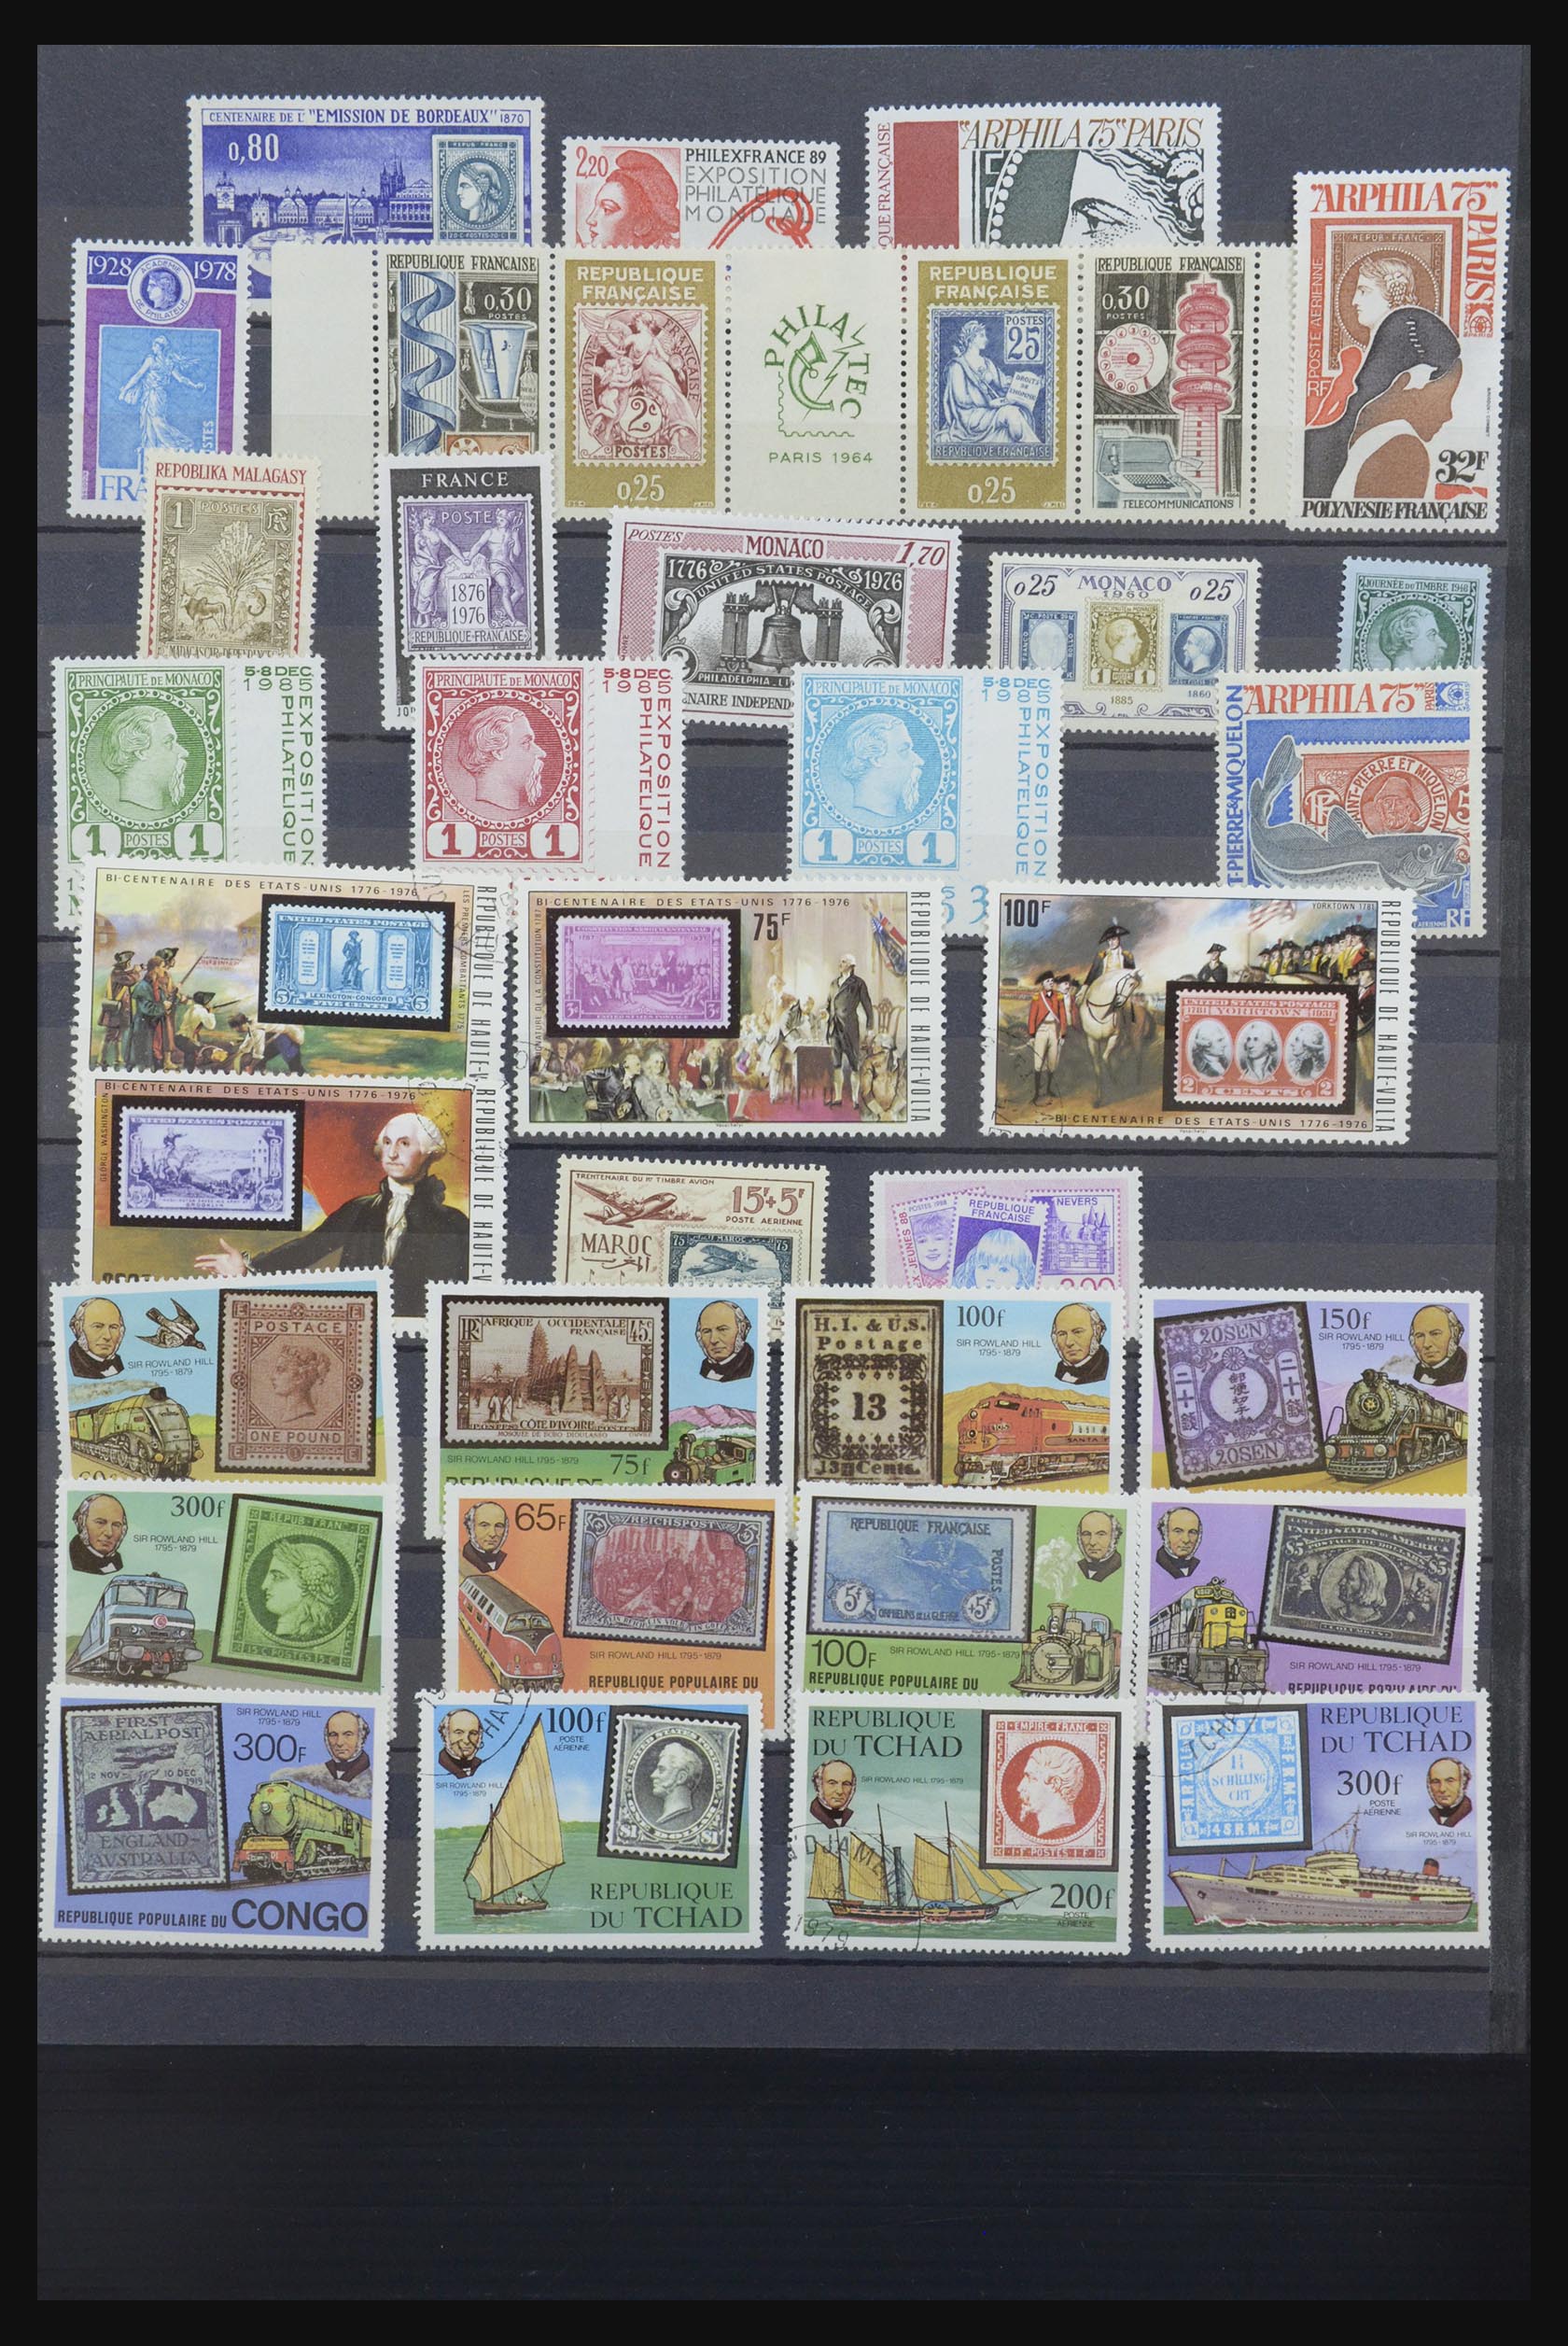 31652 077 - 31652 Motief: postzegel op postzegel 1940-1993.